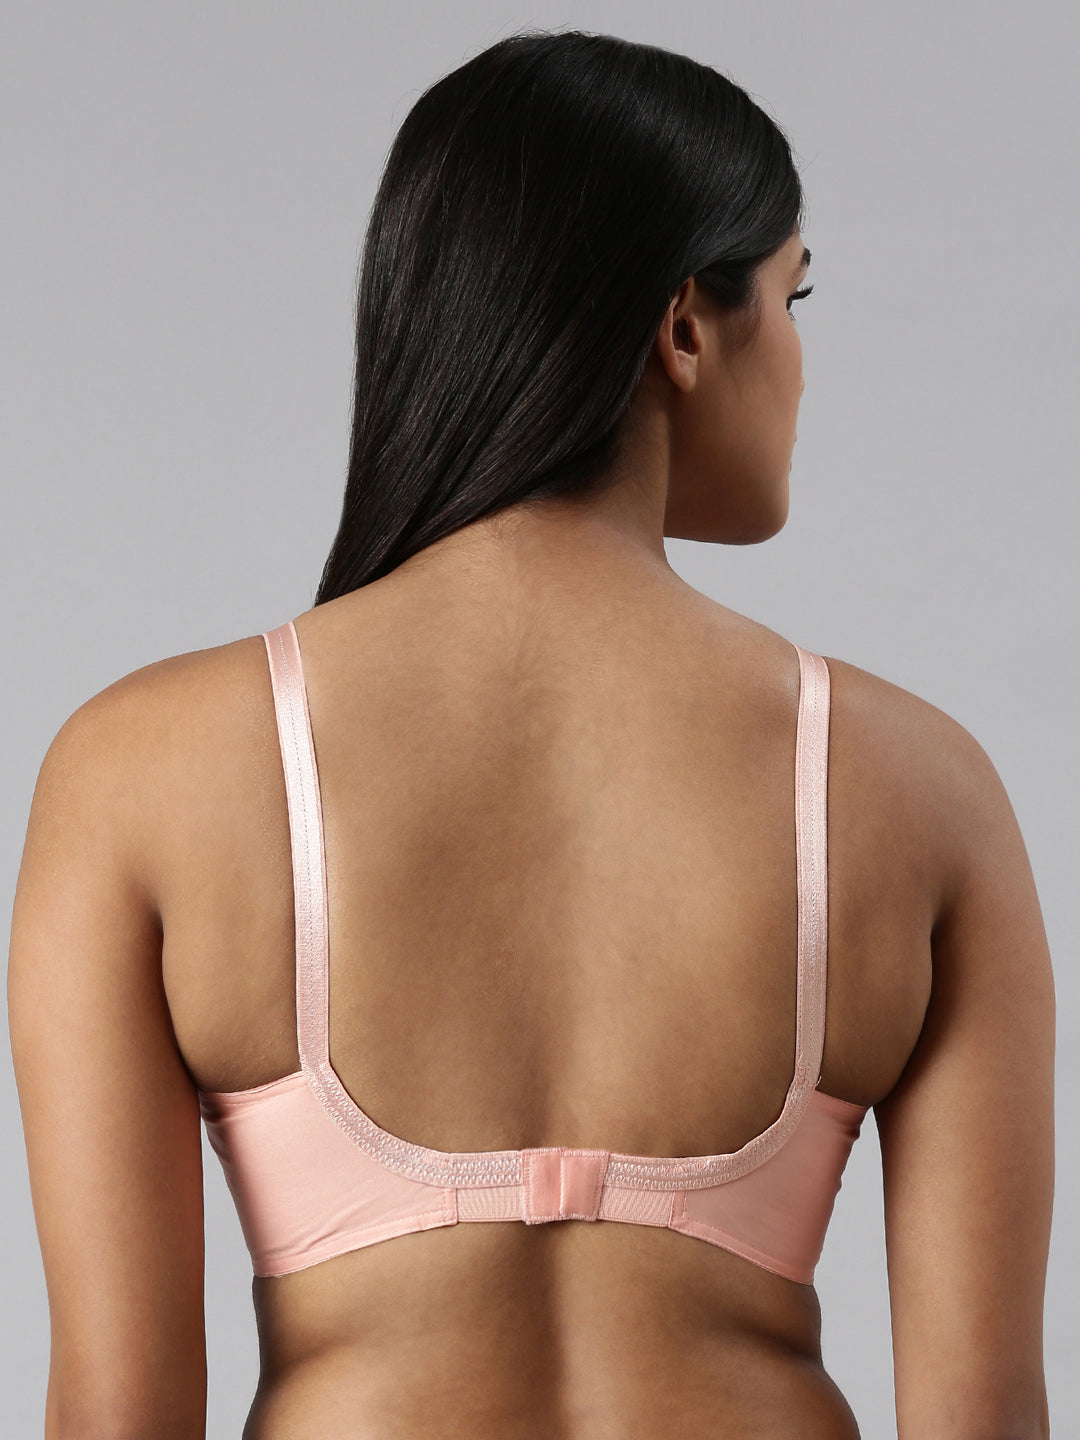 blossom-authentic bra-B Cup-peach3-Woven cotton-everyday bra